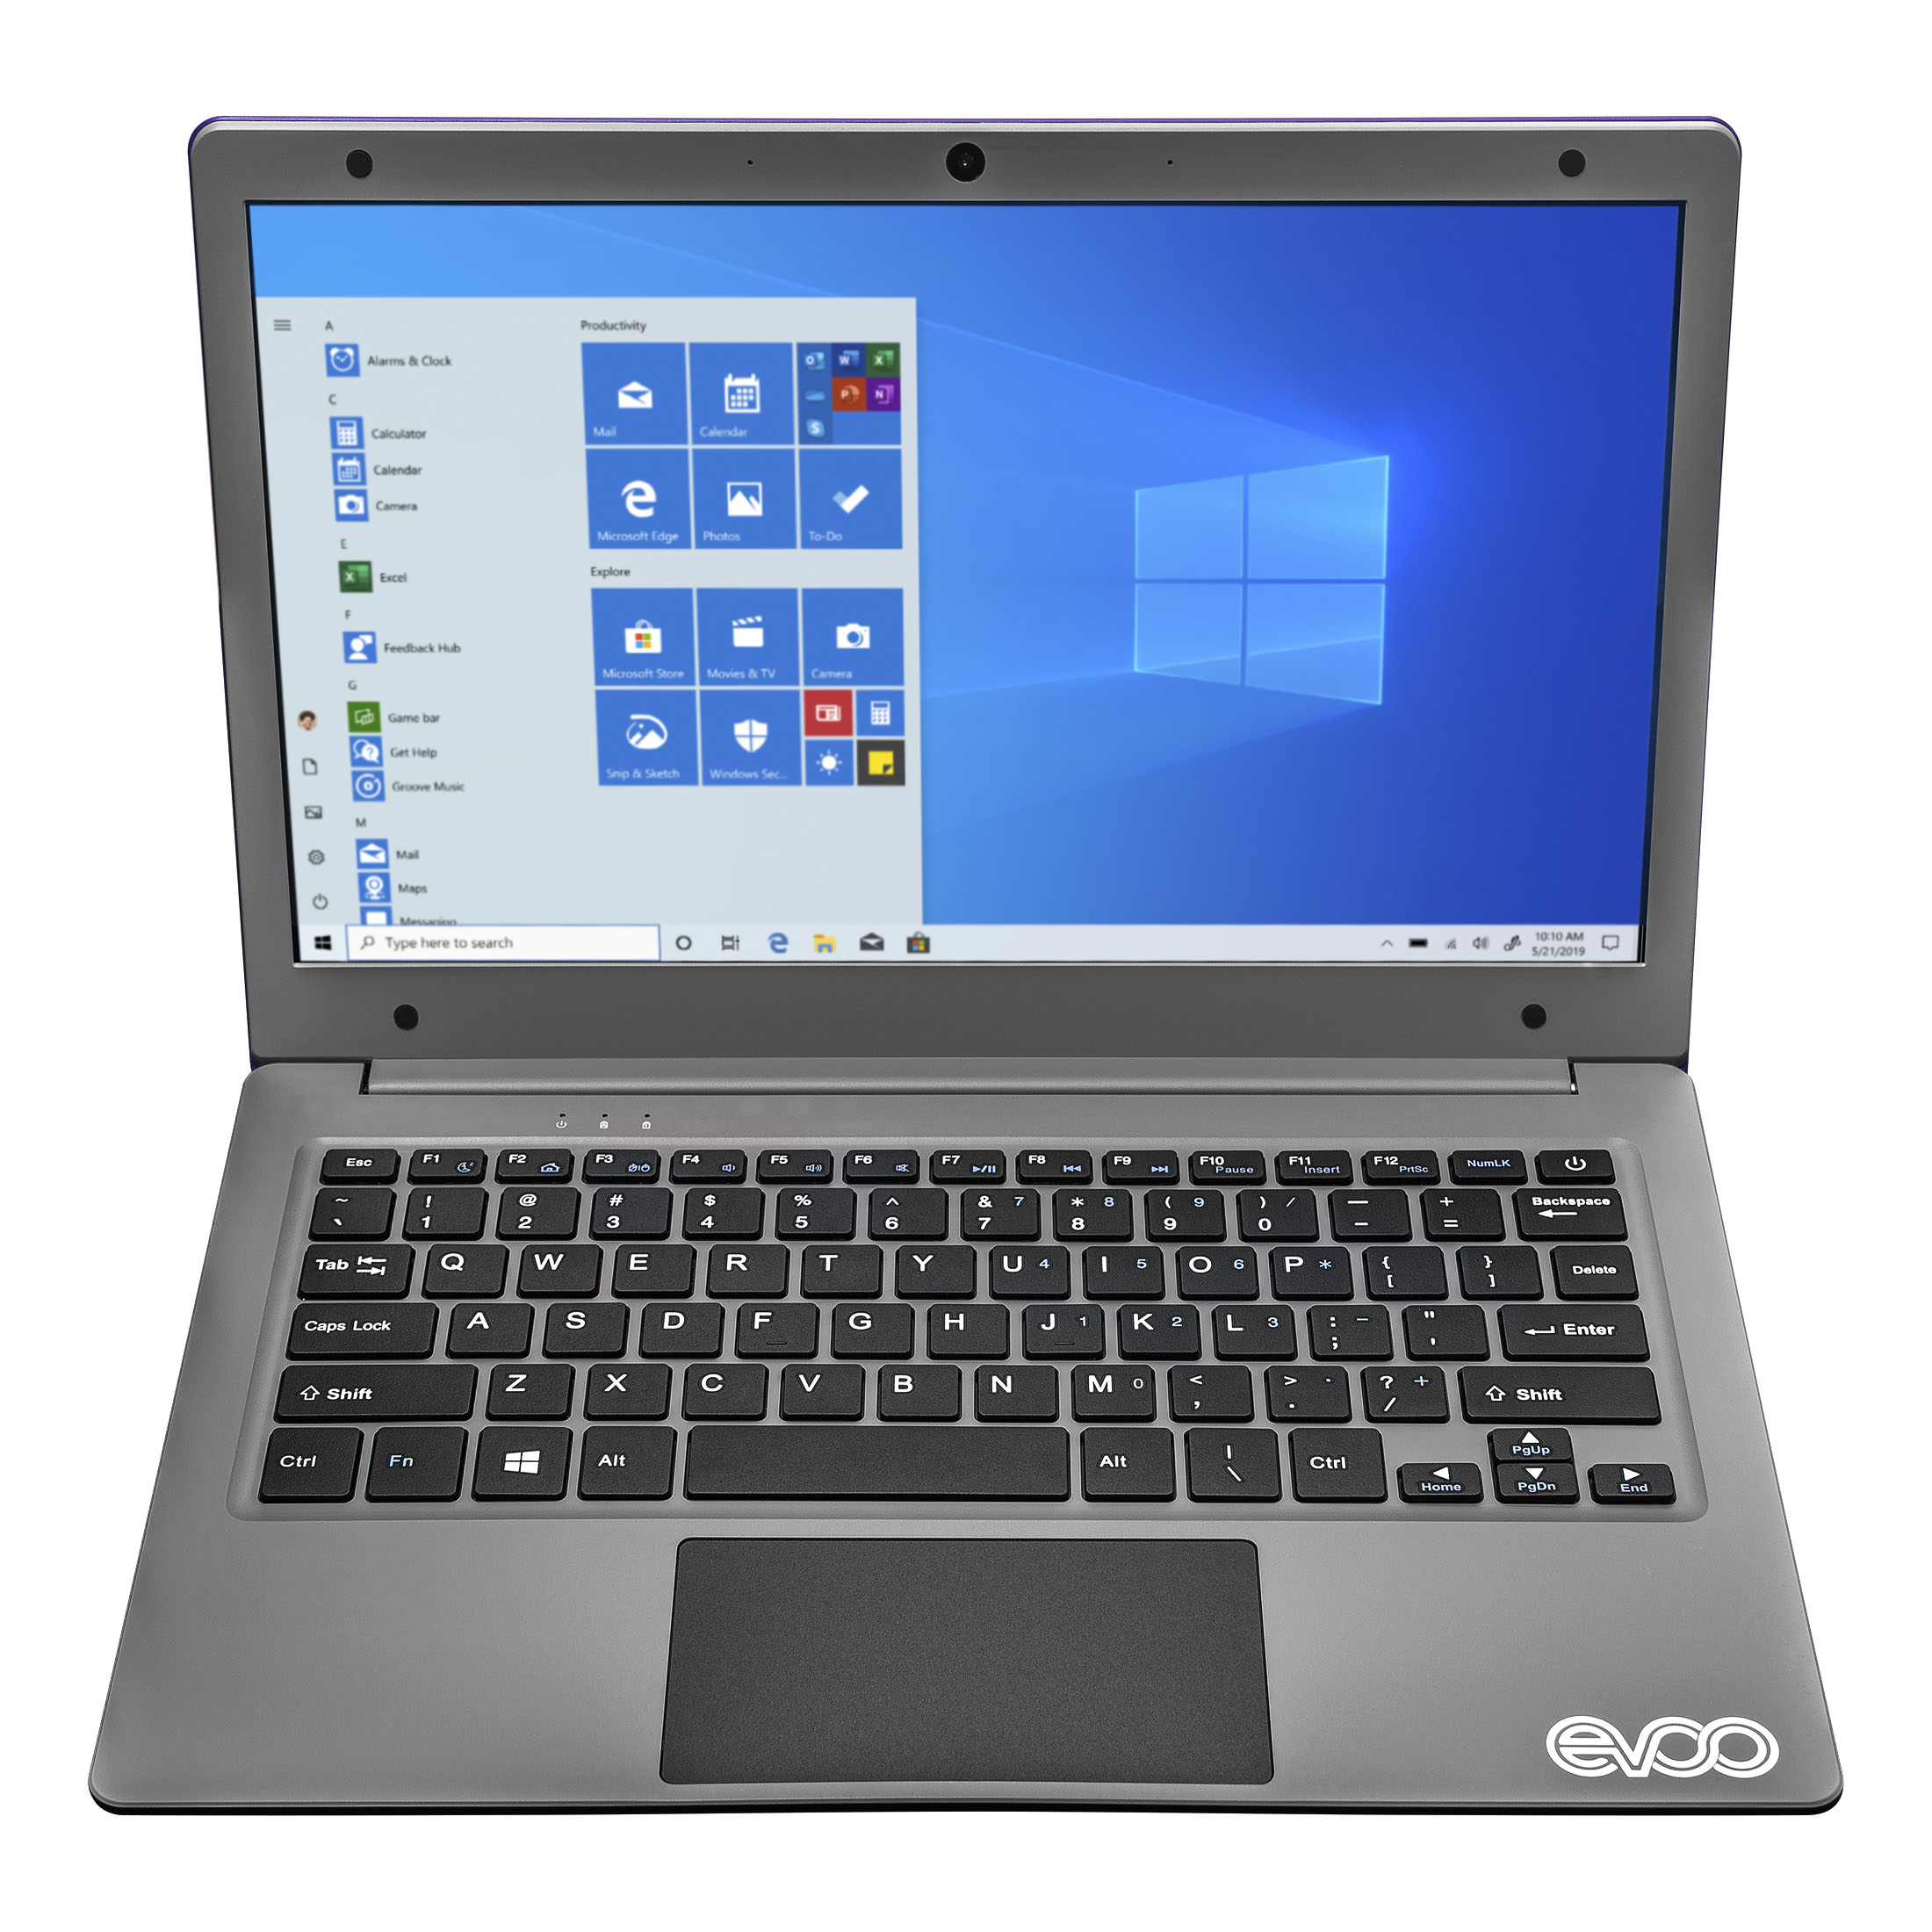 EVOO Notebook 11.6" Laptop, Intel Celeron N4000, 4GB RAM, 64GB HD, Windows 10 Home, Blue - image 1 of 5